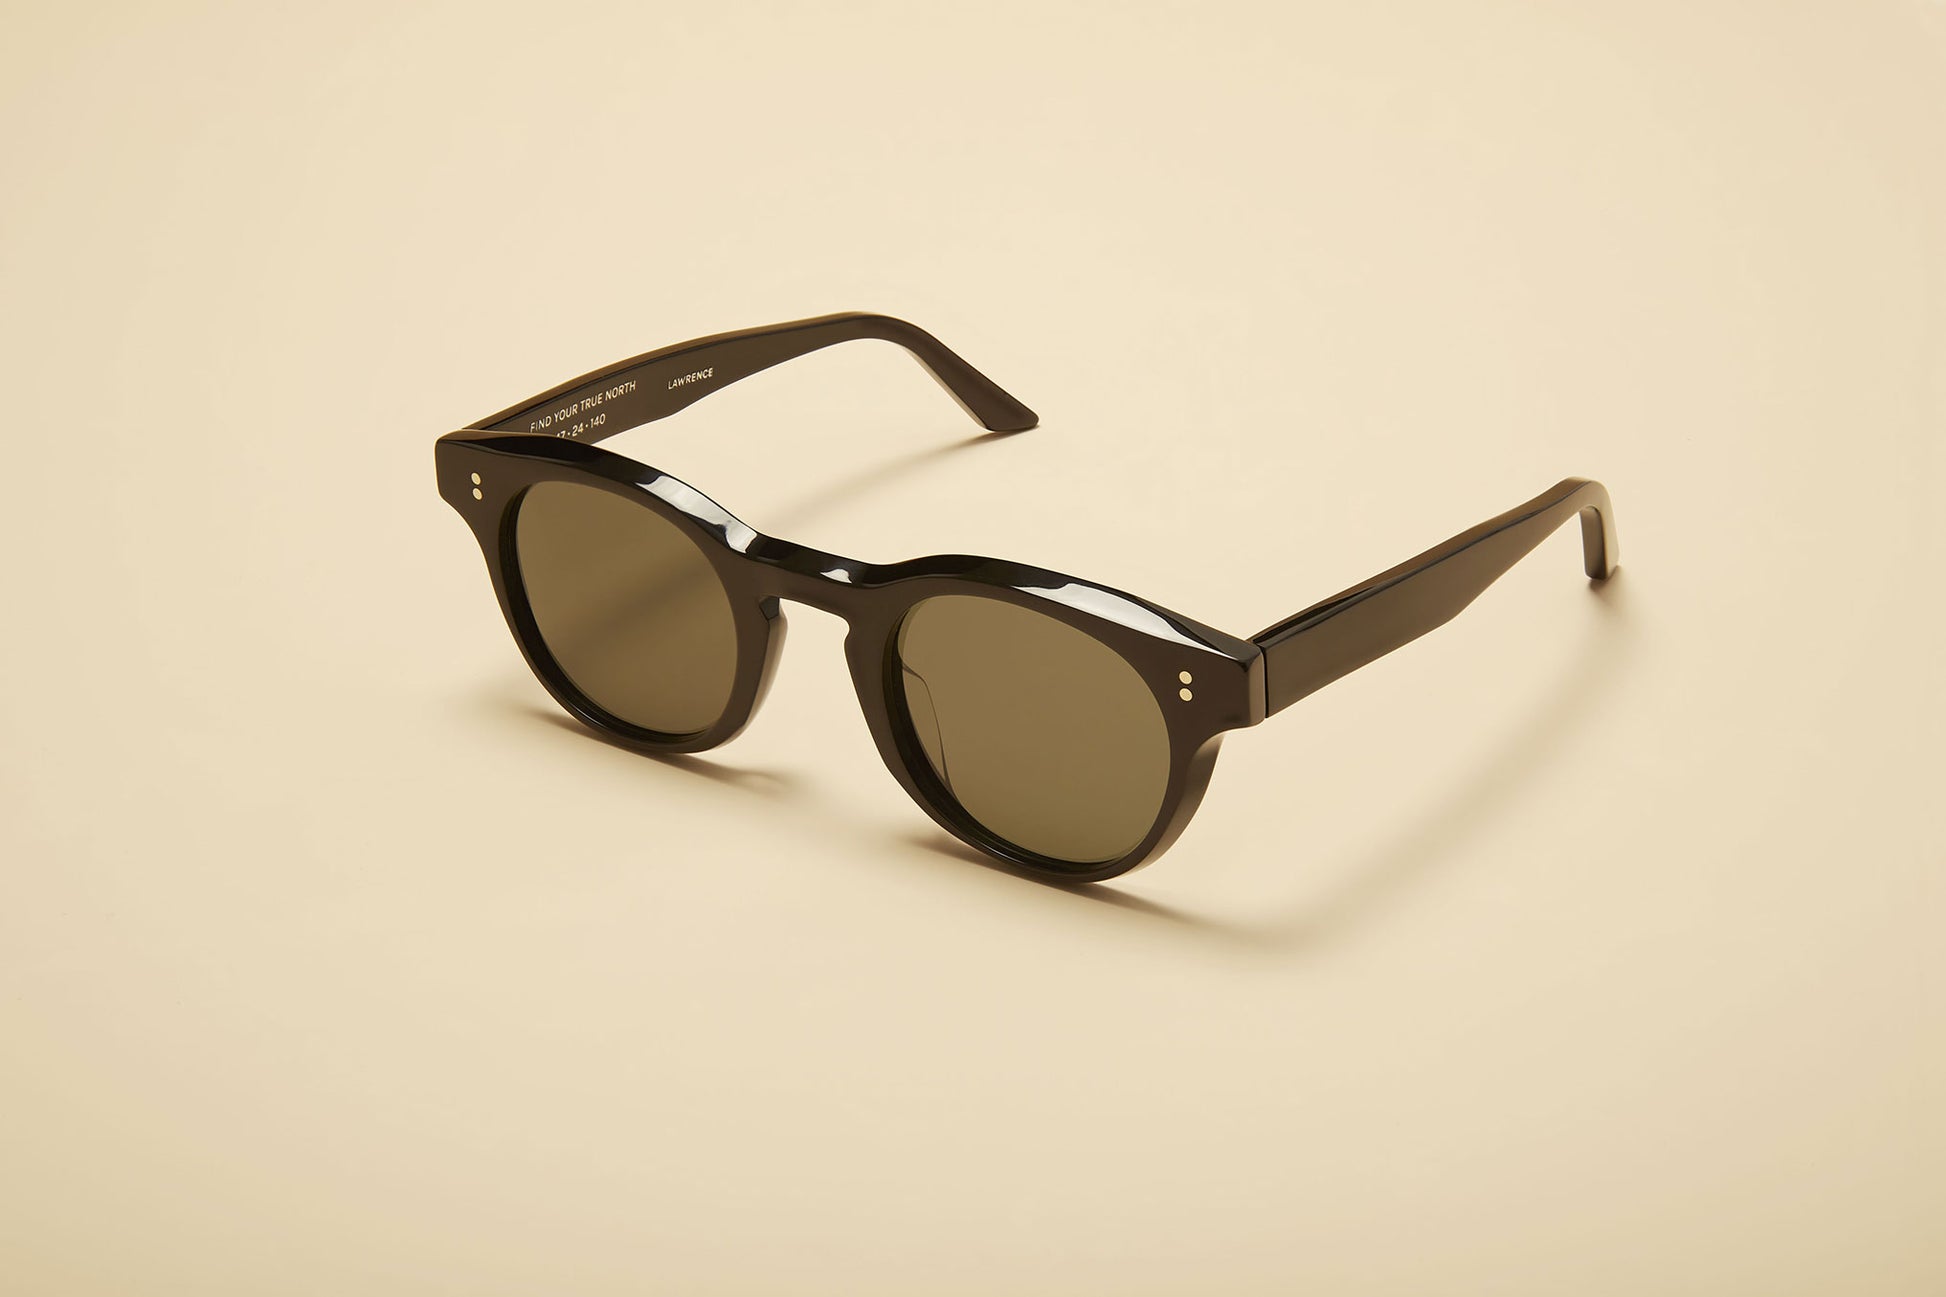 Black round sunglasses side view